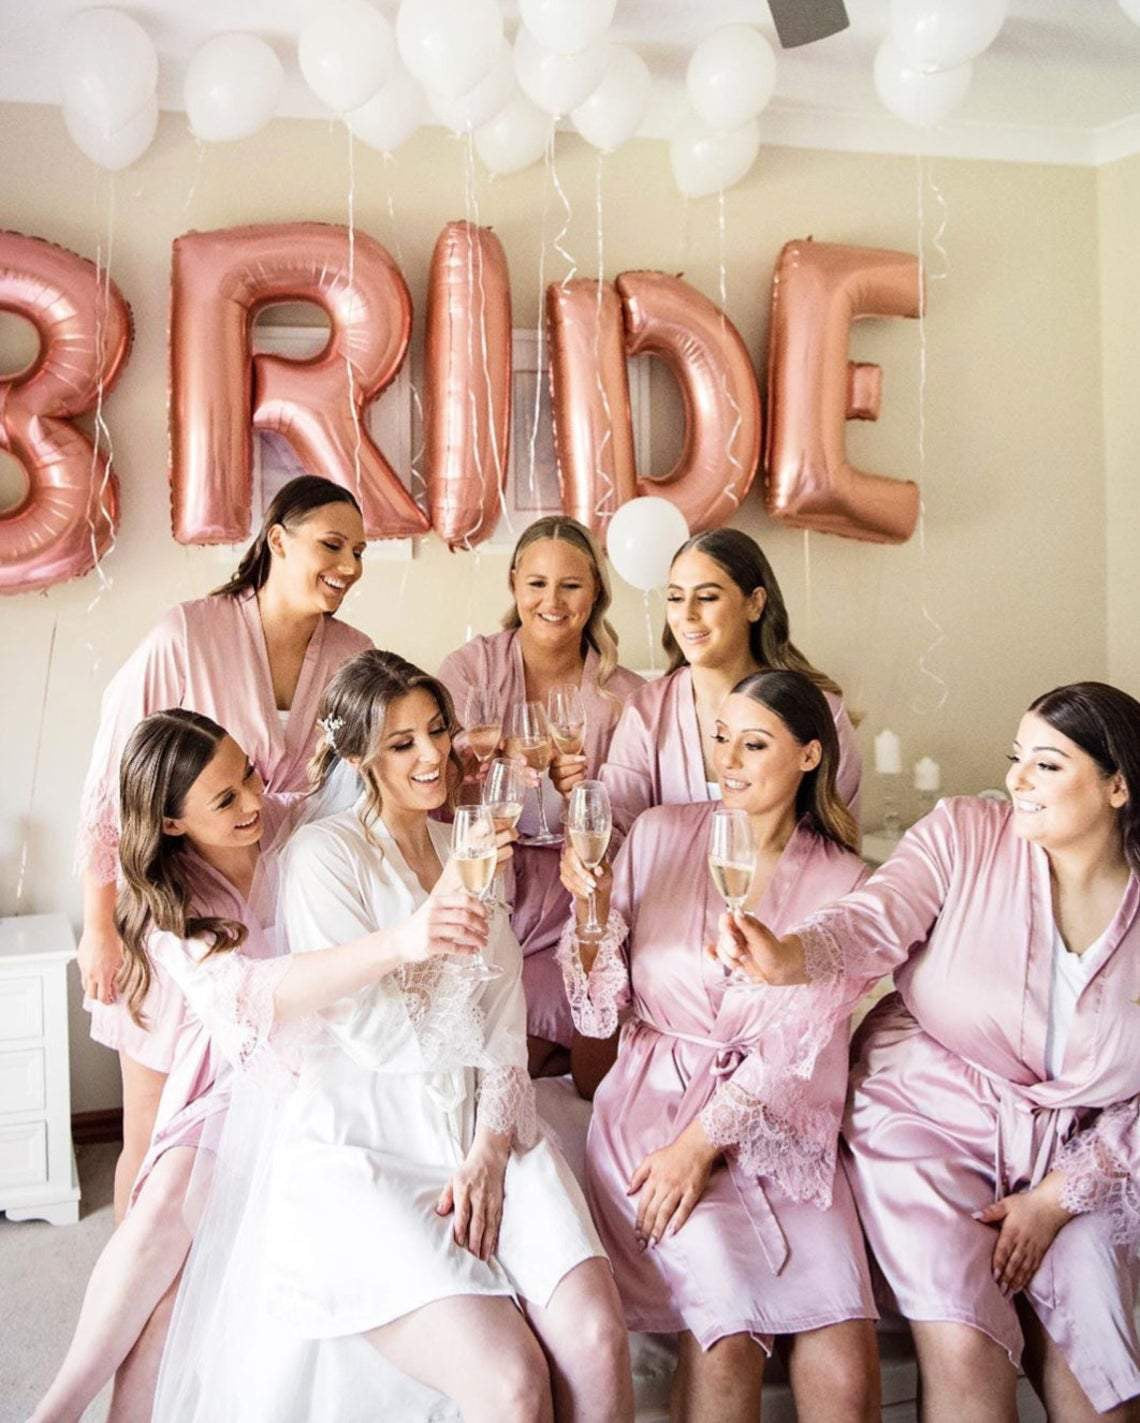 Bridal Robe - Pink